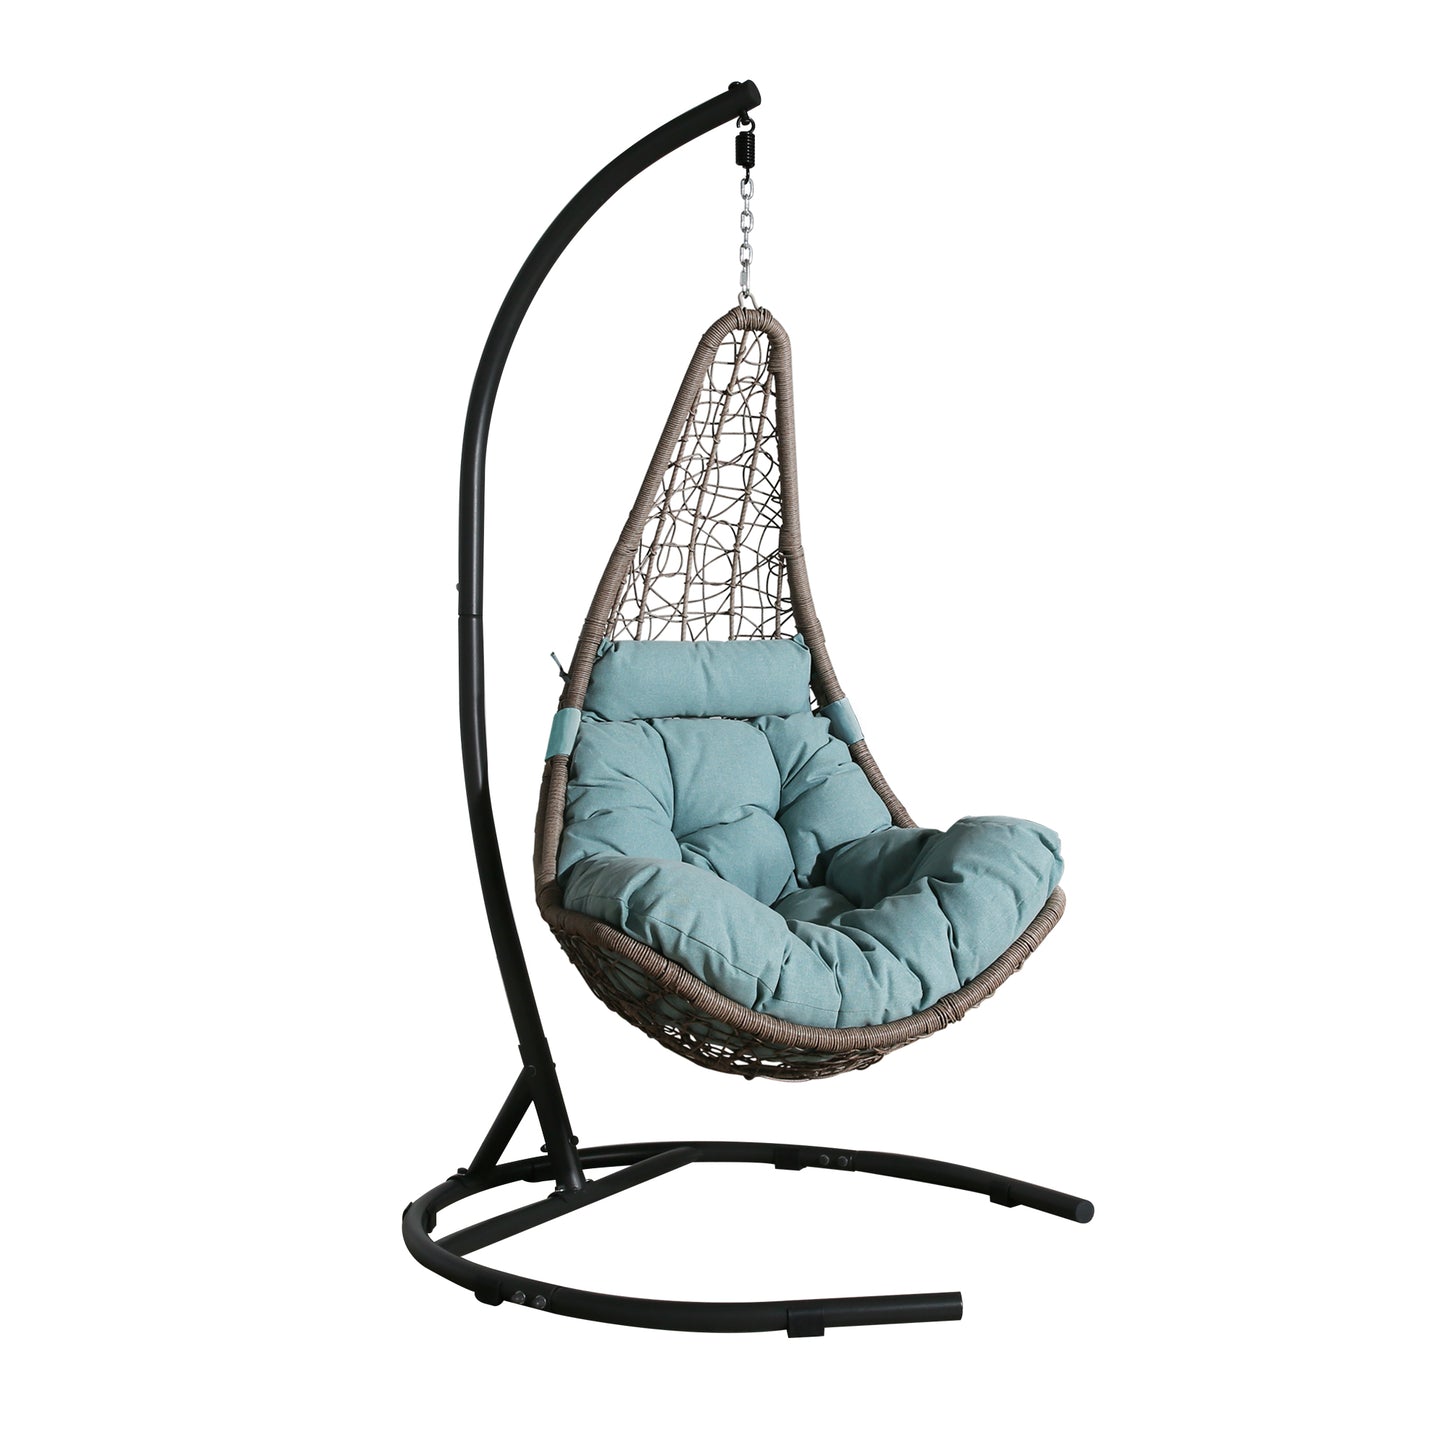 Indoor/Outdoor Wicker Hanging Basket Swing Chair, Hammock Moon Chair with Stand(Blue)